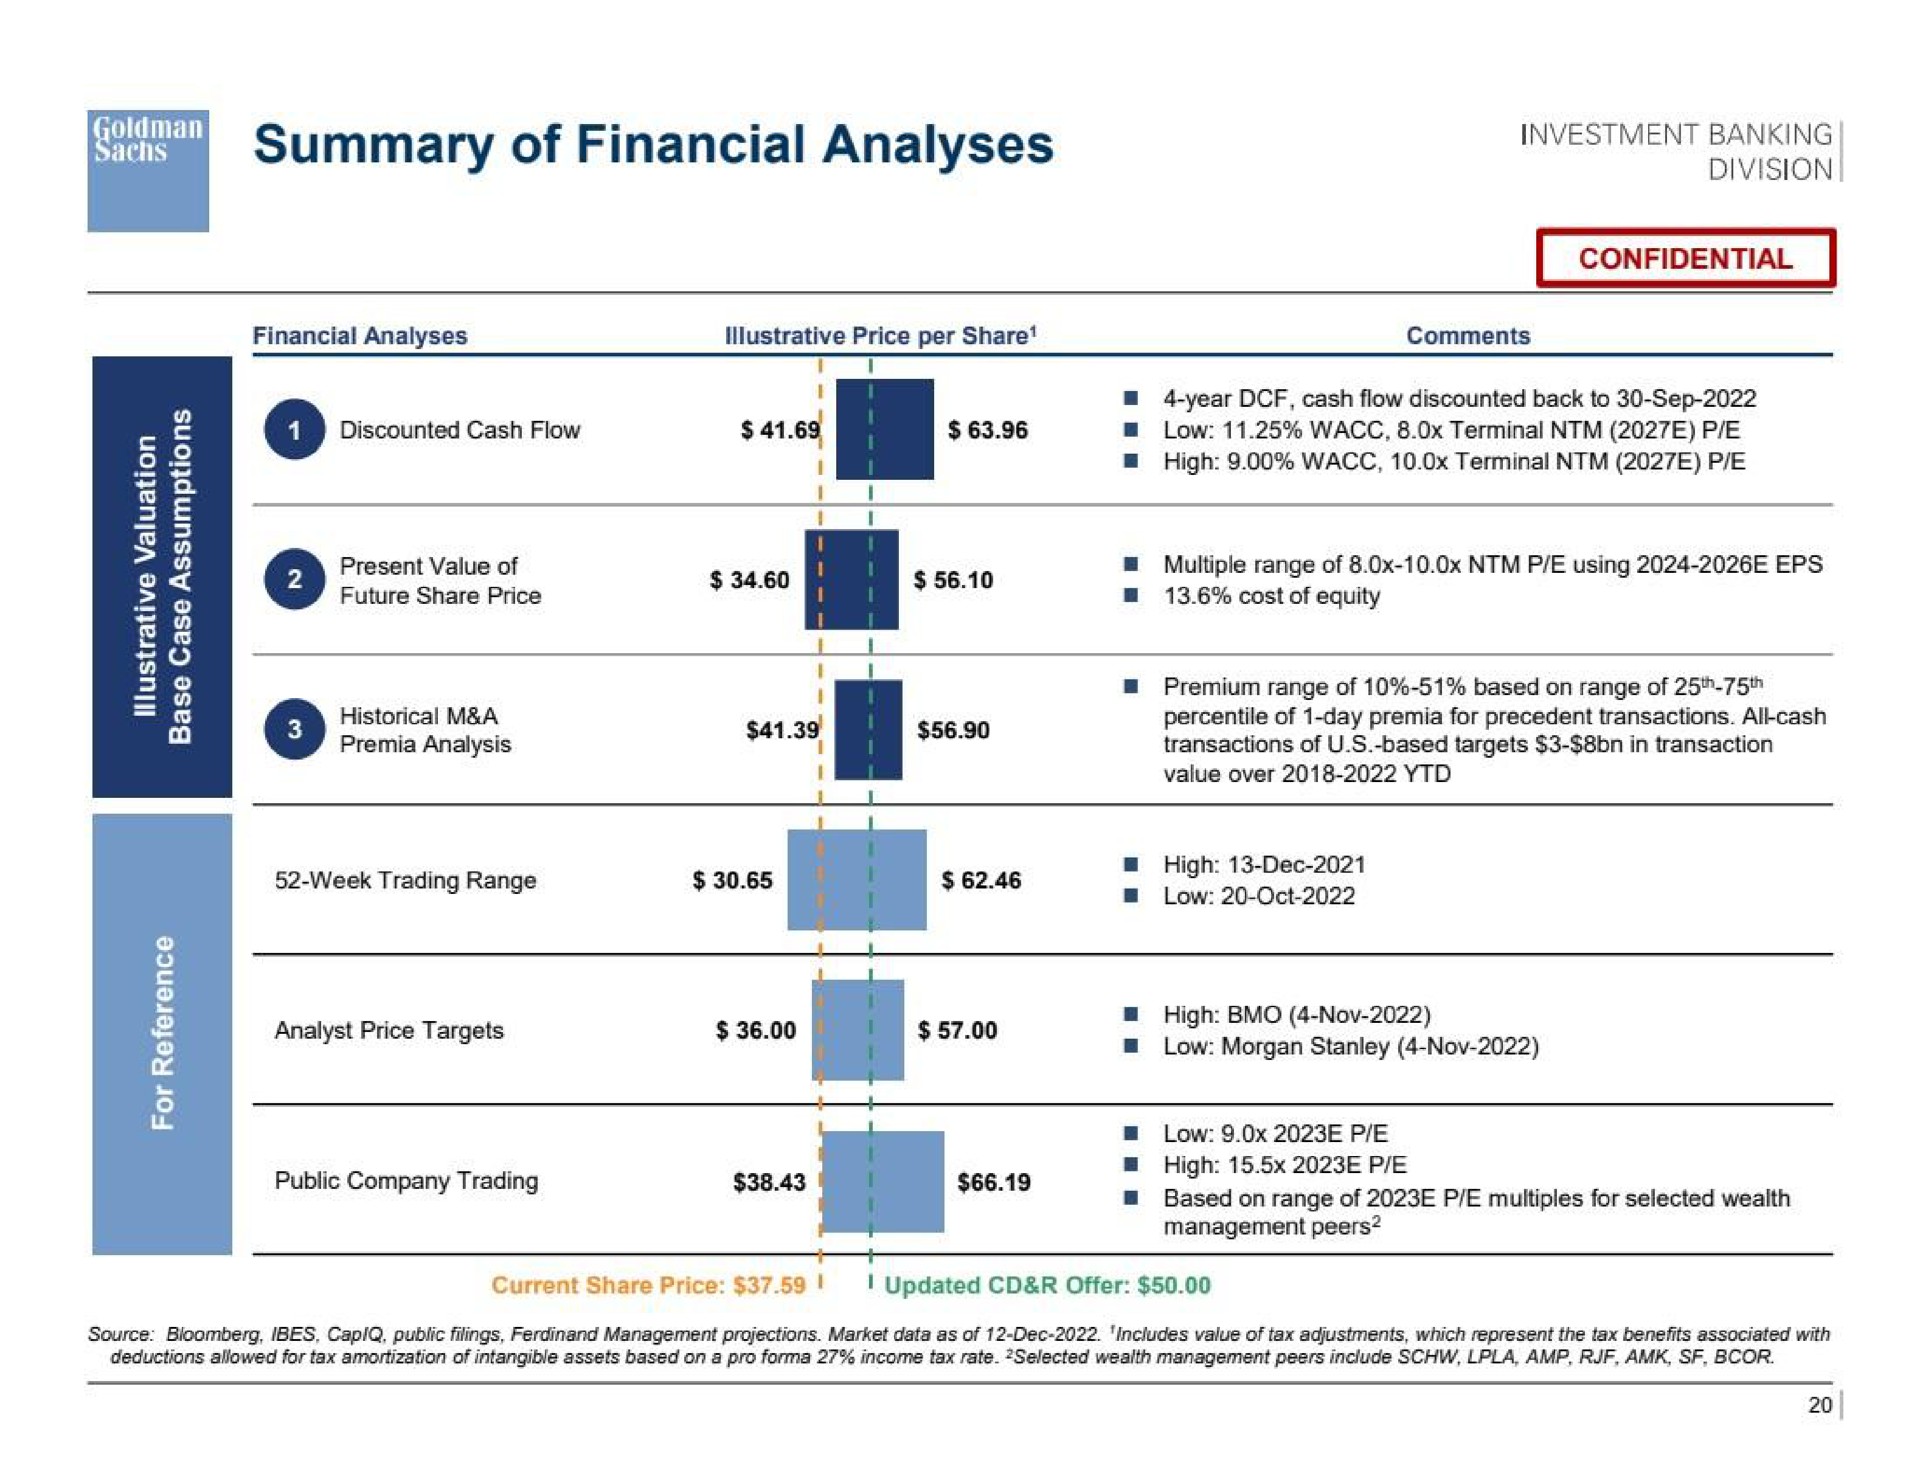 summary of financial analyses i | Goldman Sachs